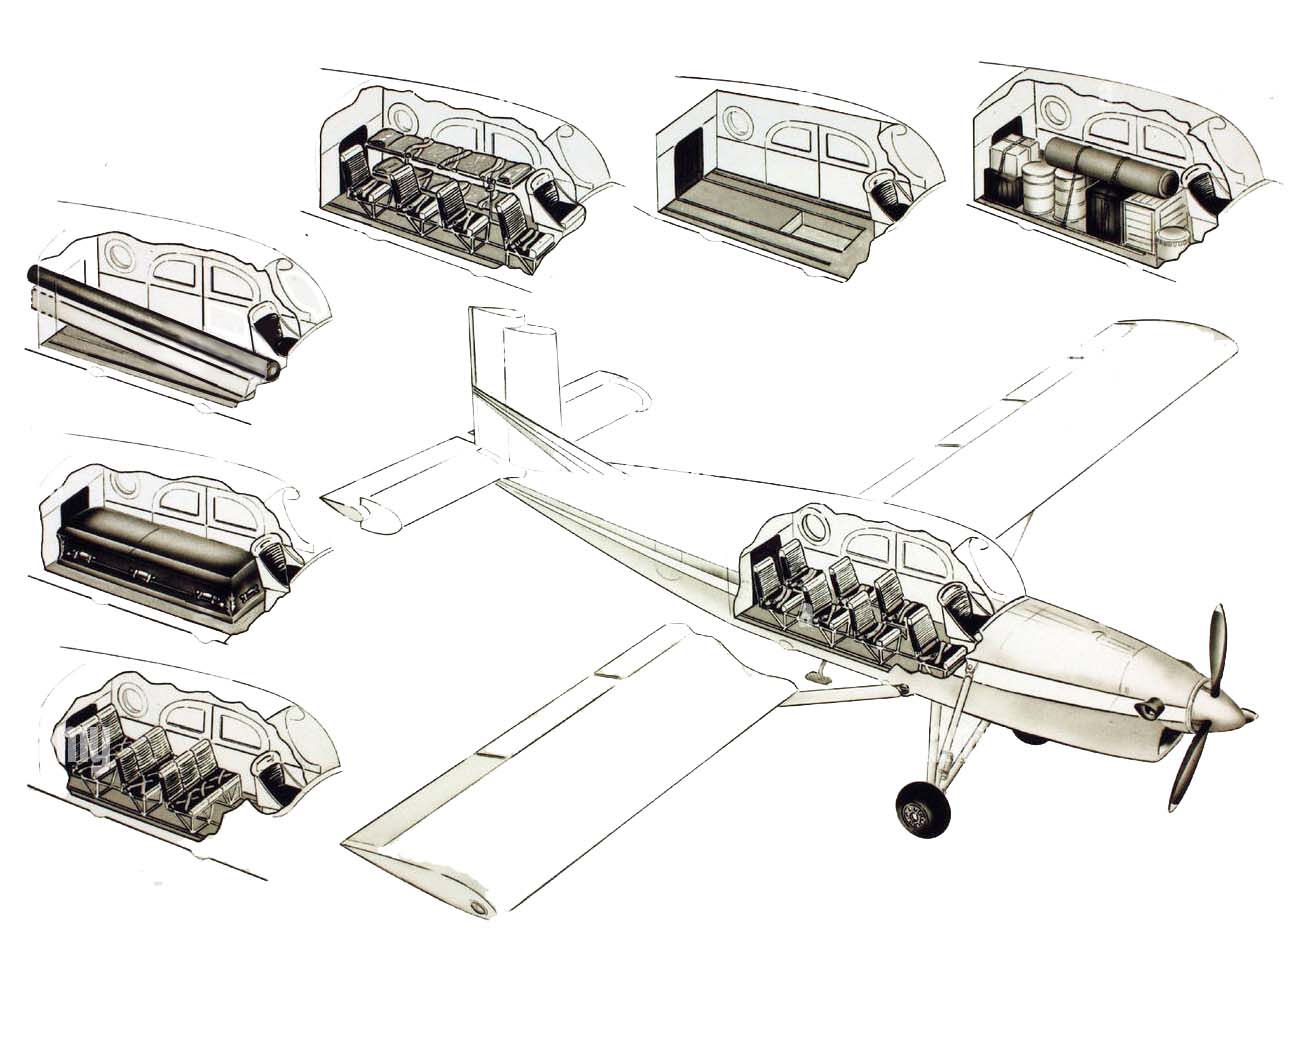 Pilatus PC-6 layout